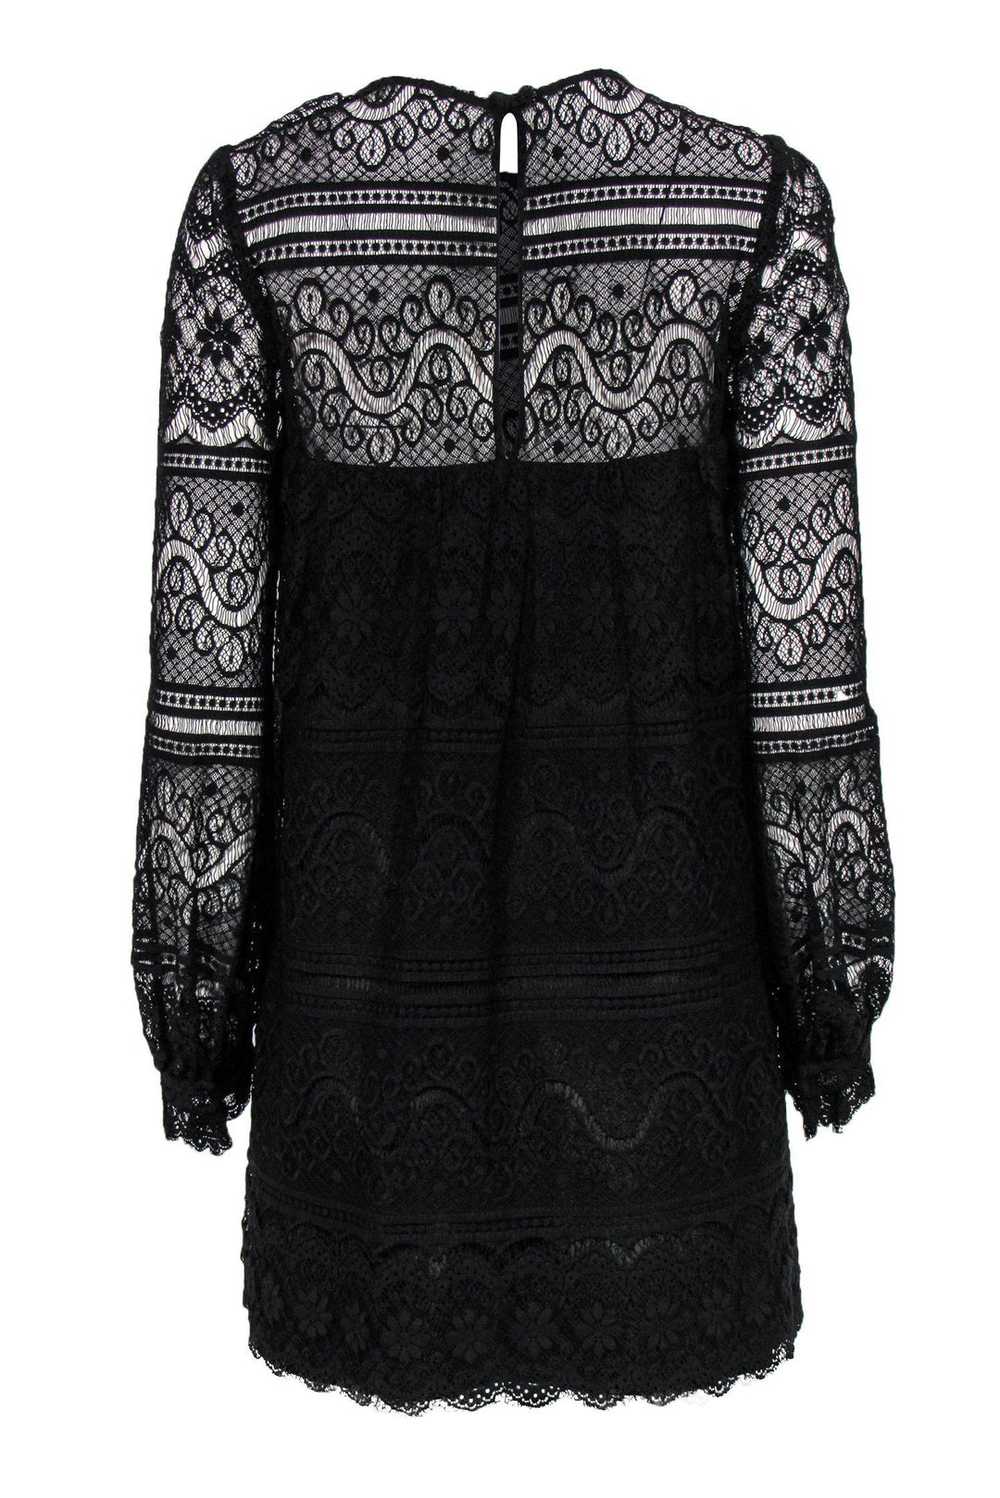 Milly - Black Lace Long Sleeve Shift Dress Sz 8 - image 3